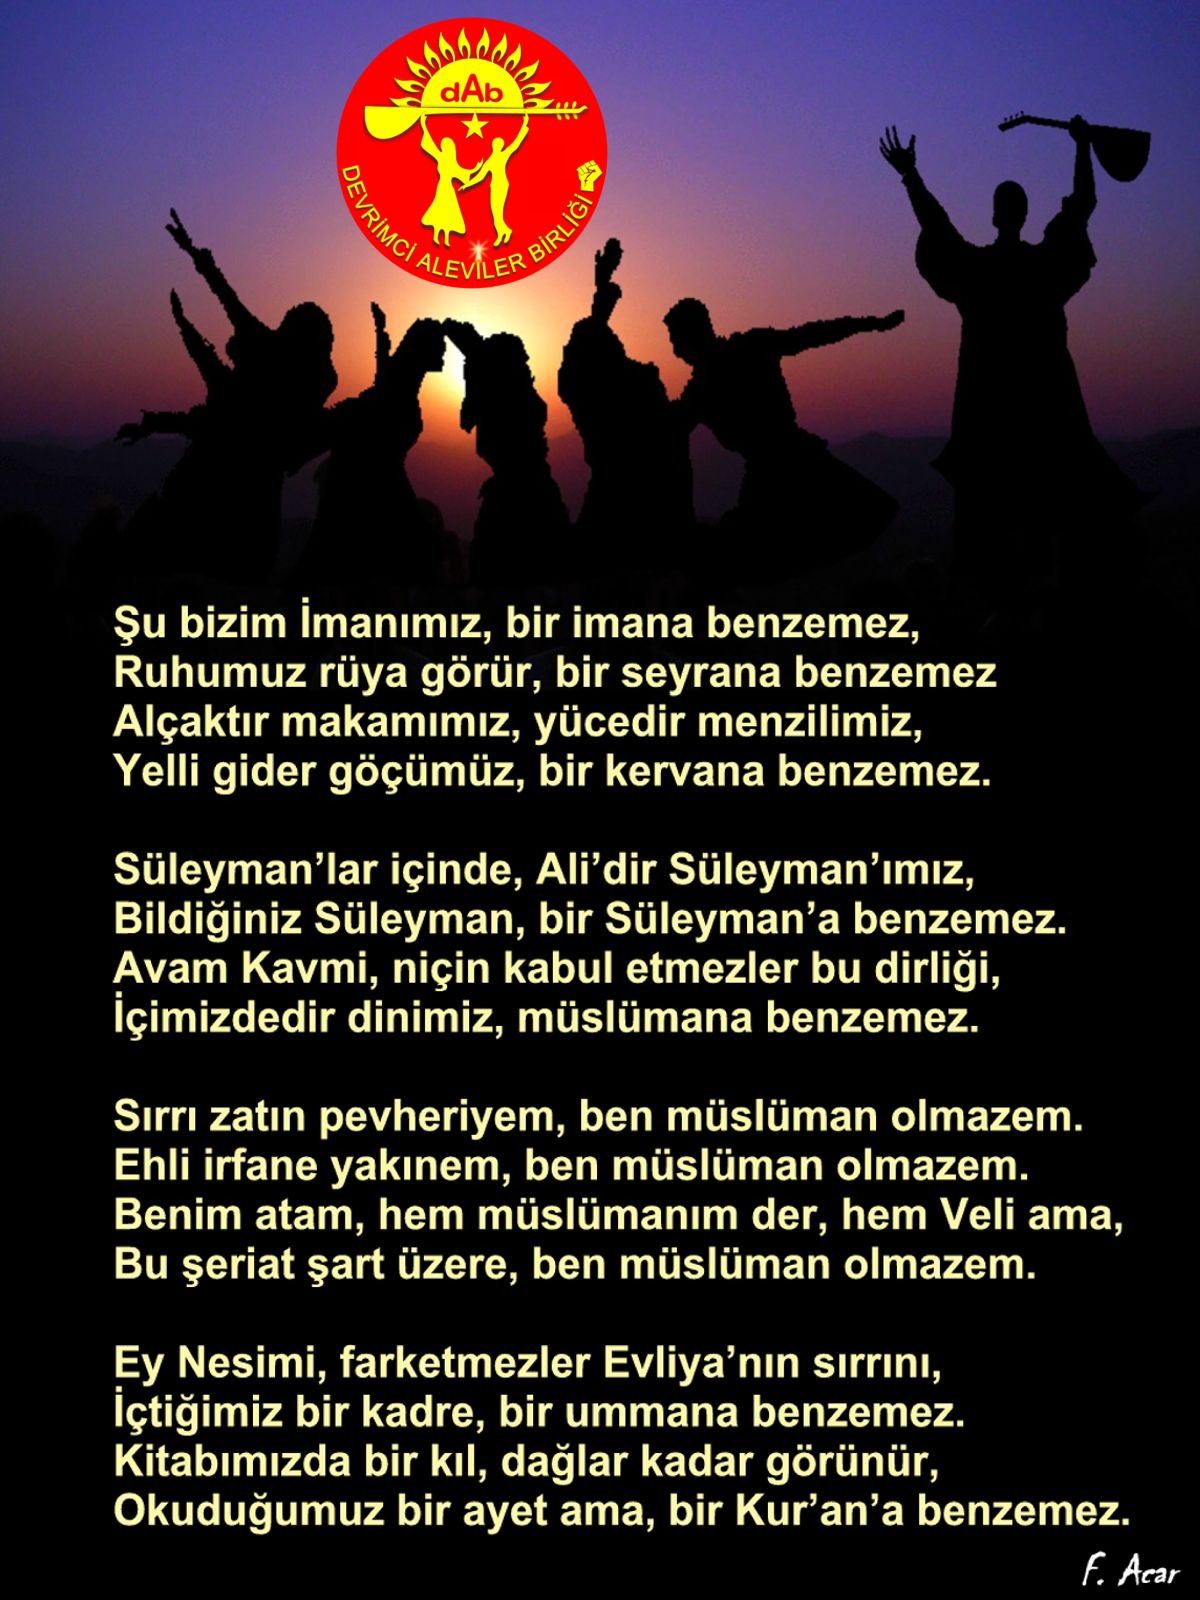 Alevi Bektaşi Kızılbaş Pir Sultan Devrimci Aleviler Birliği DAB benzemez